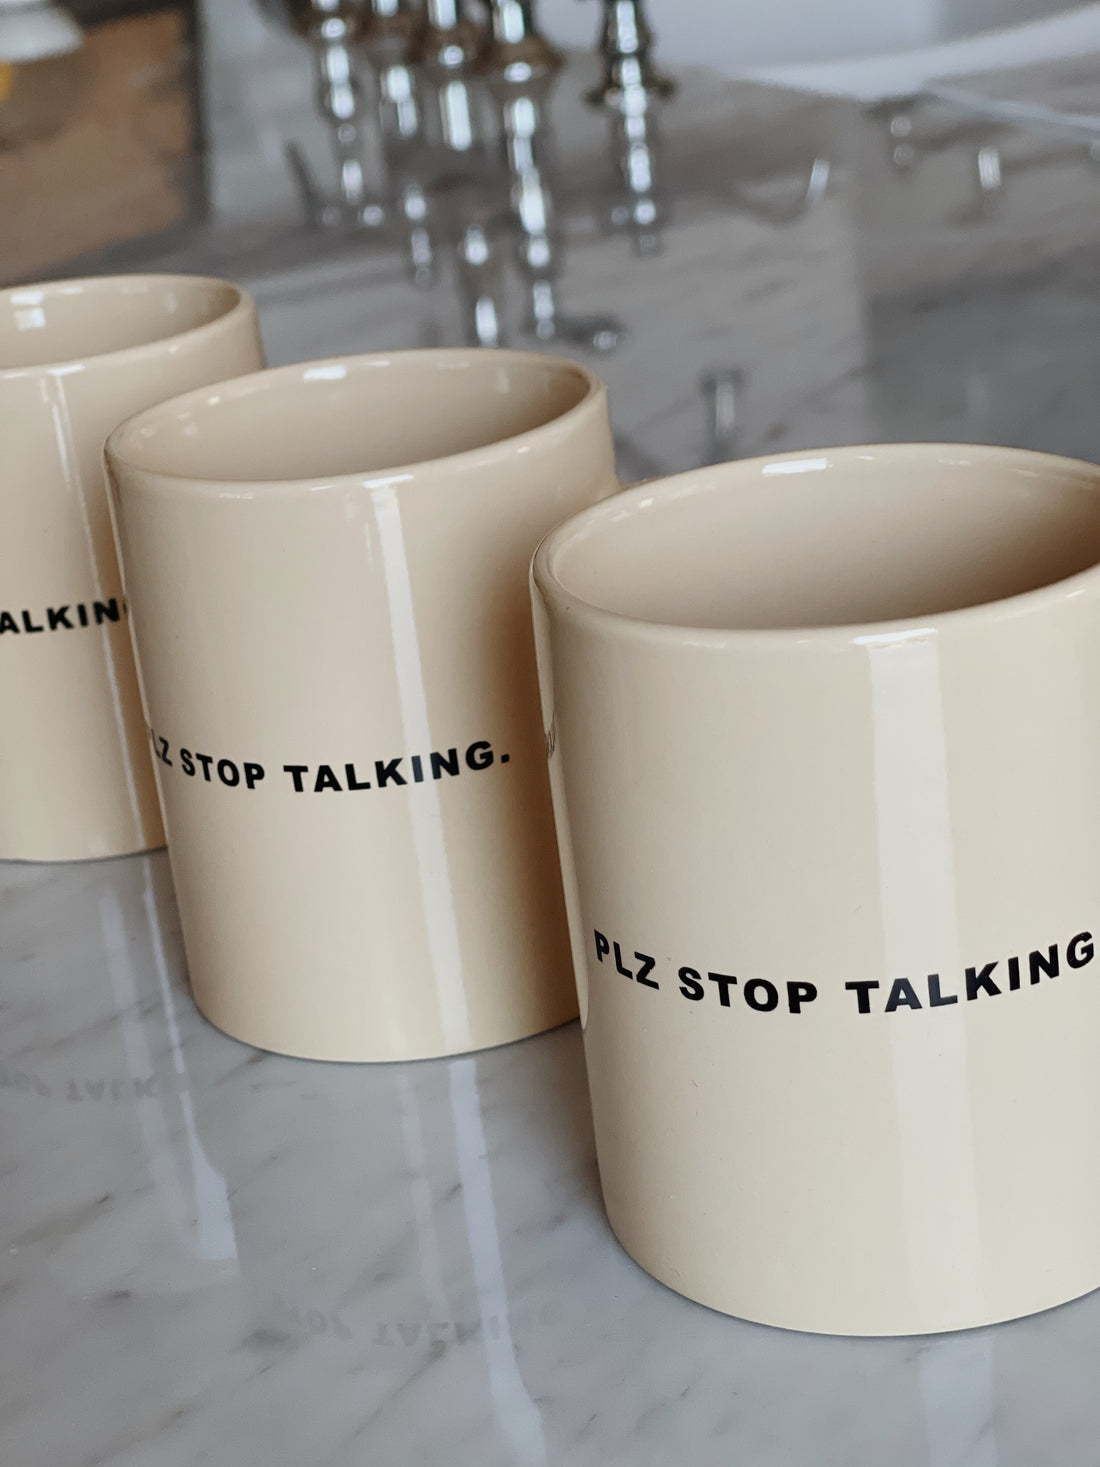 Plz Stop Talking Coffee Cup